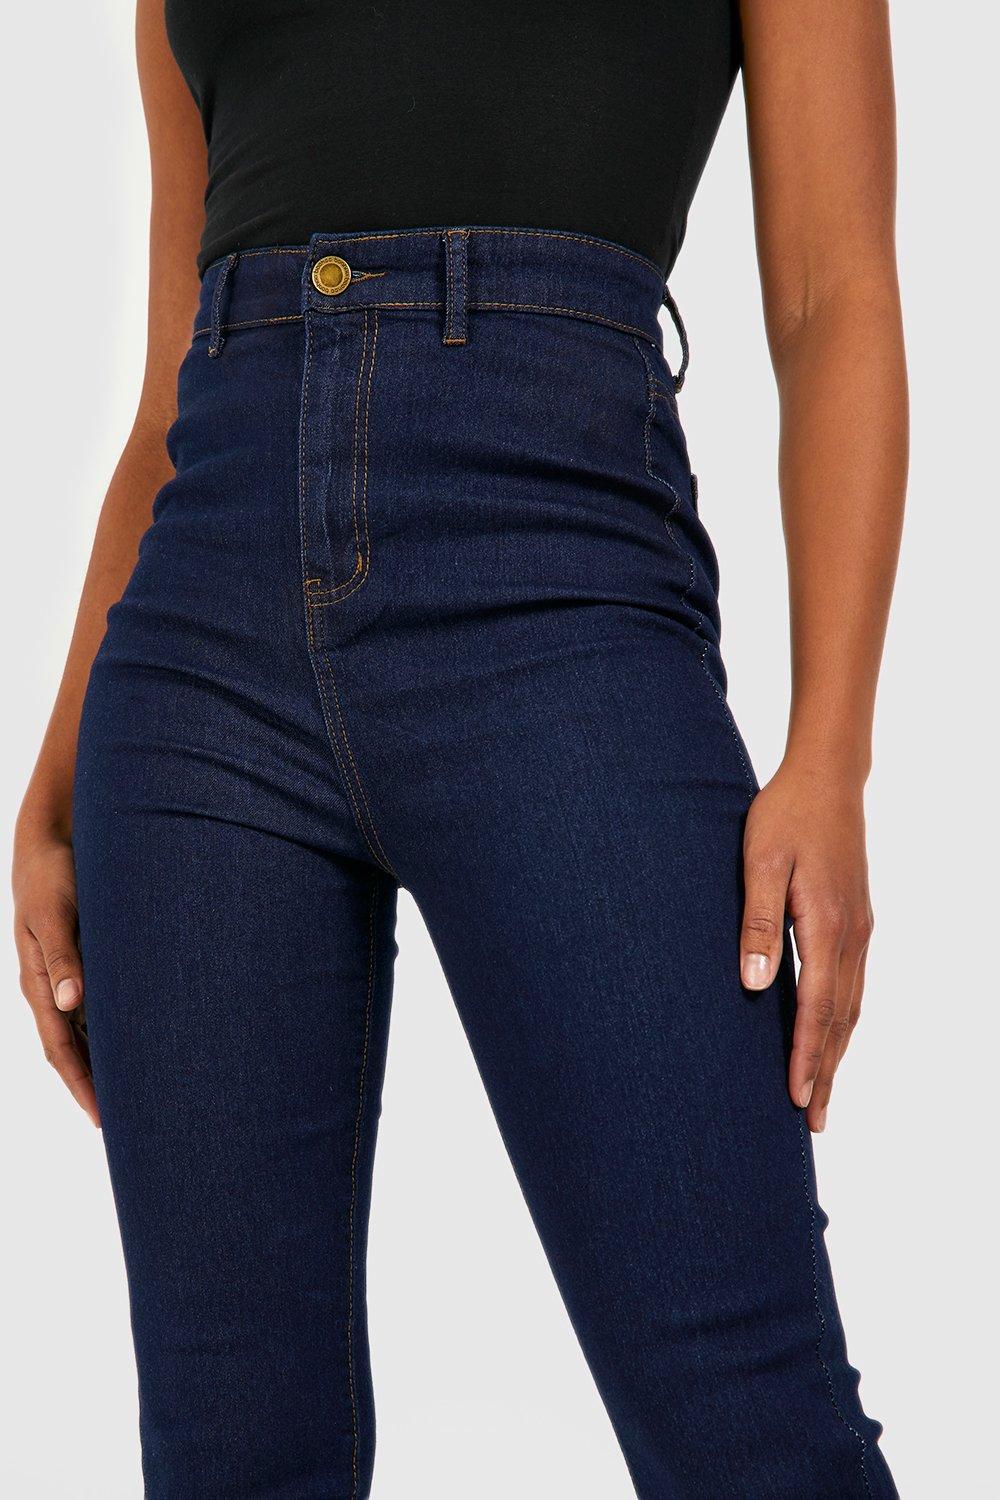 Women's Tall Basic High Waisted Skinny Jeans